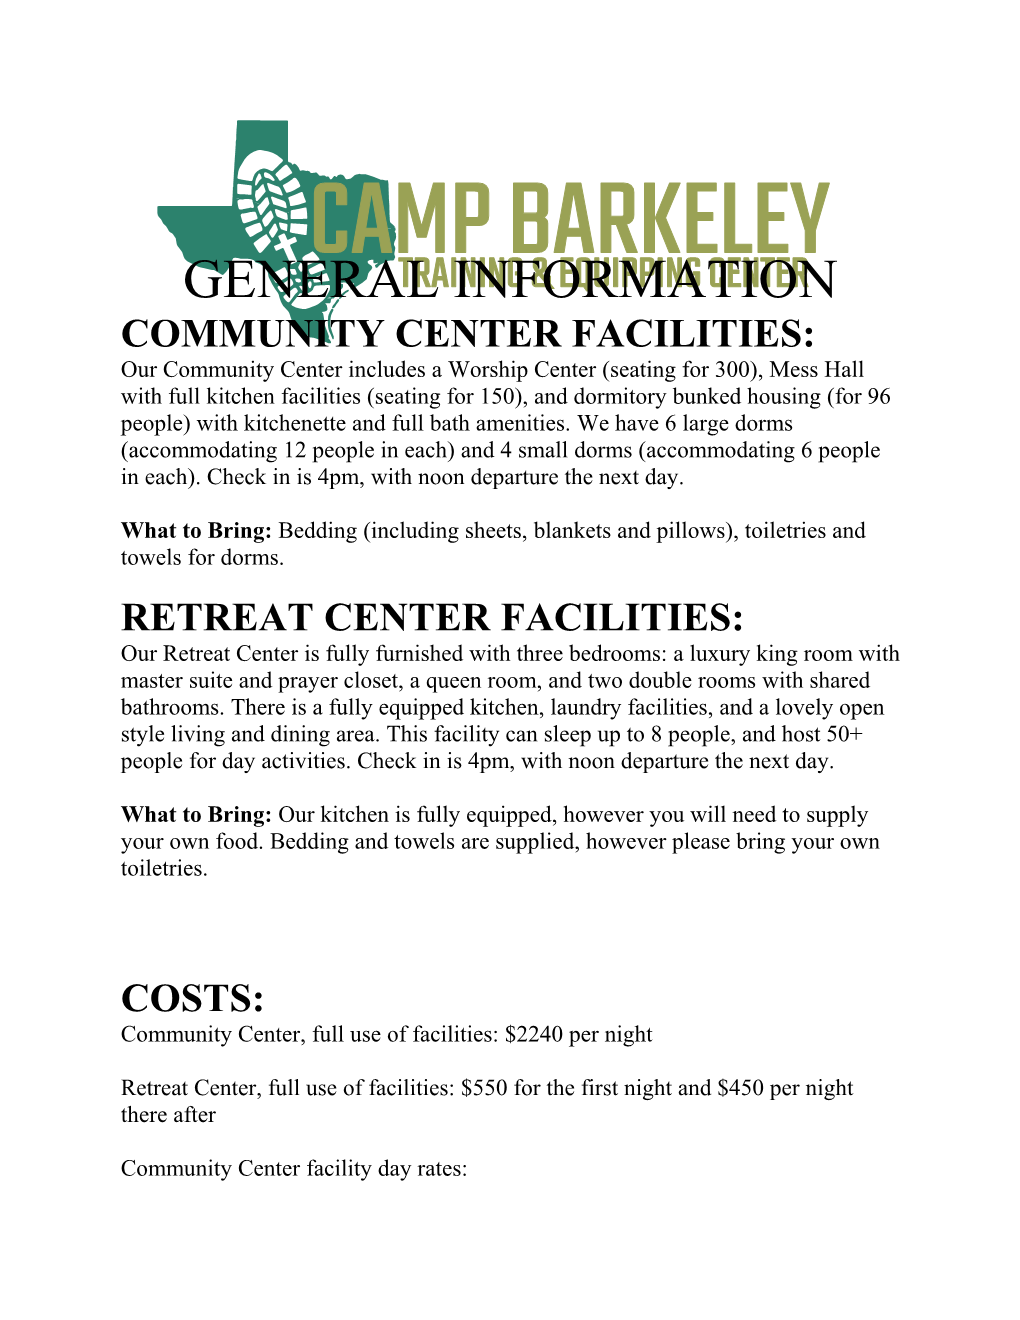 Community Center Facilities